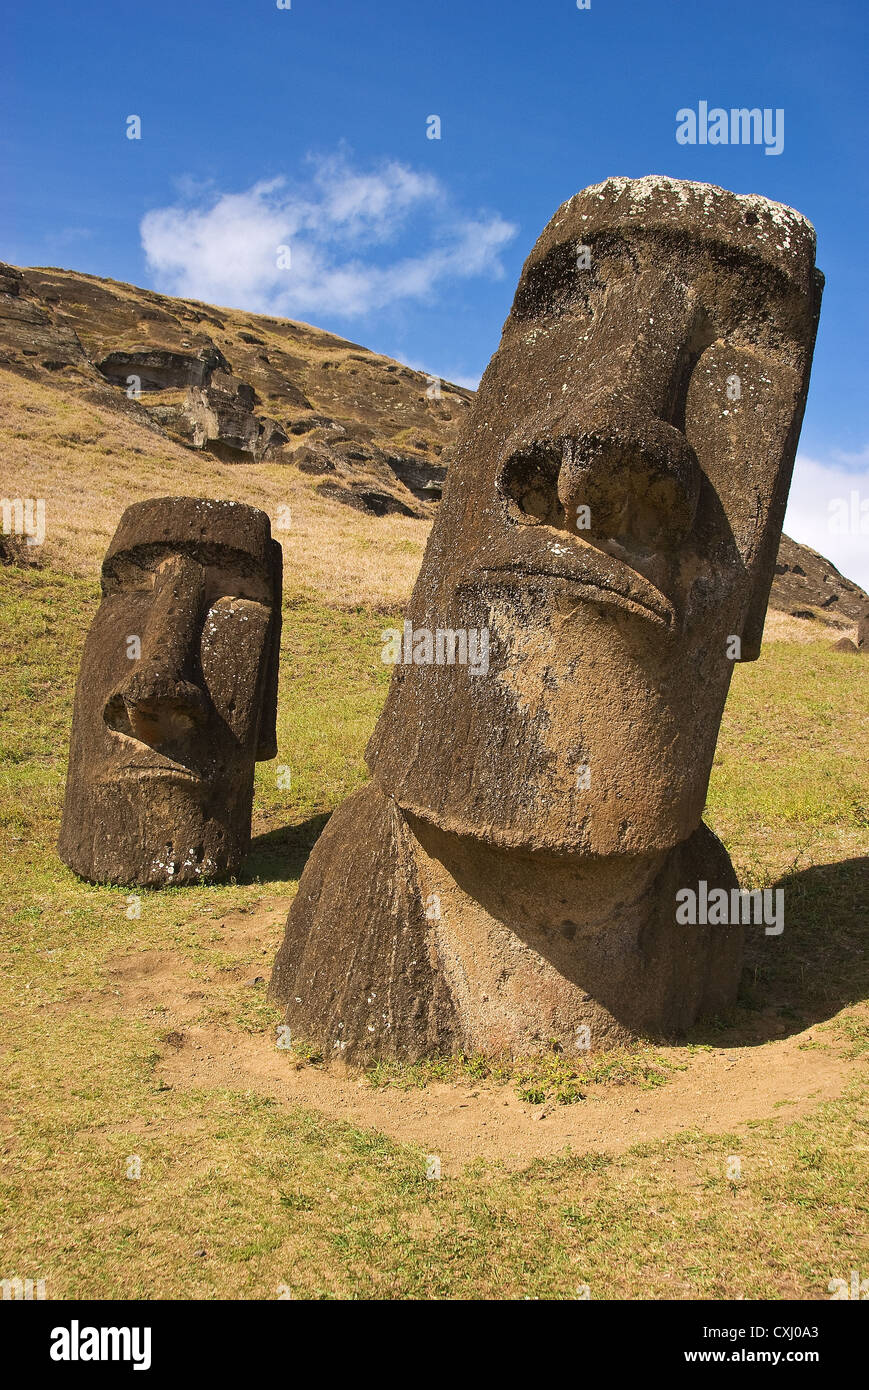 Elk198-5291v Cile, Isola di Pasqua, Rano Raraku, moai statue Foto Stock